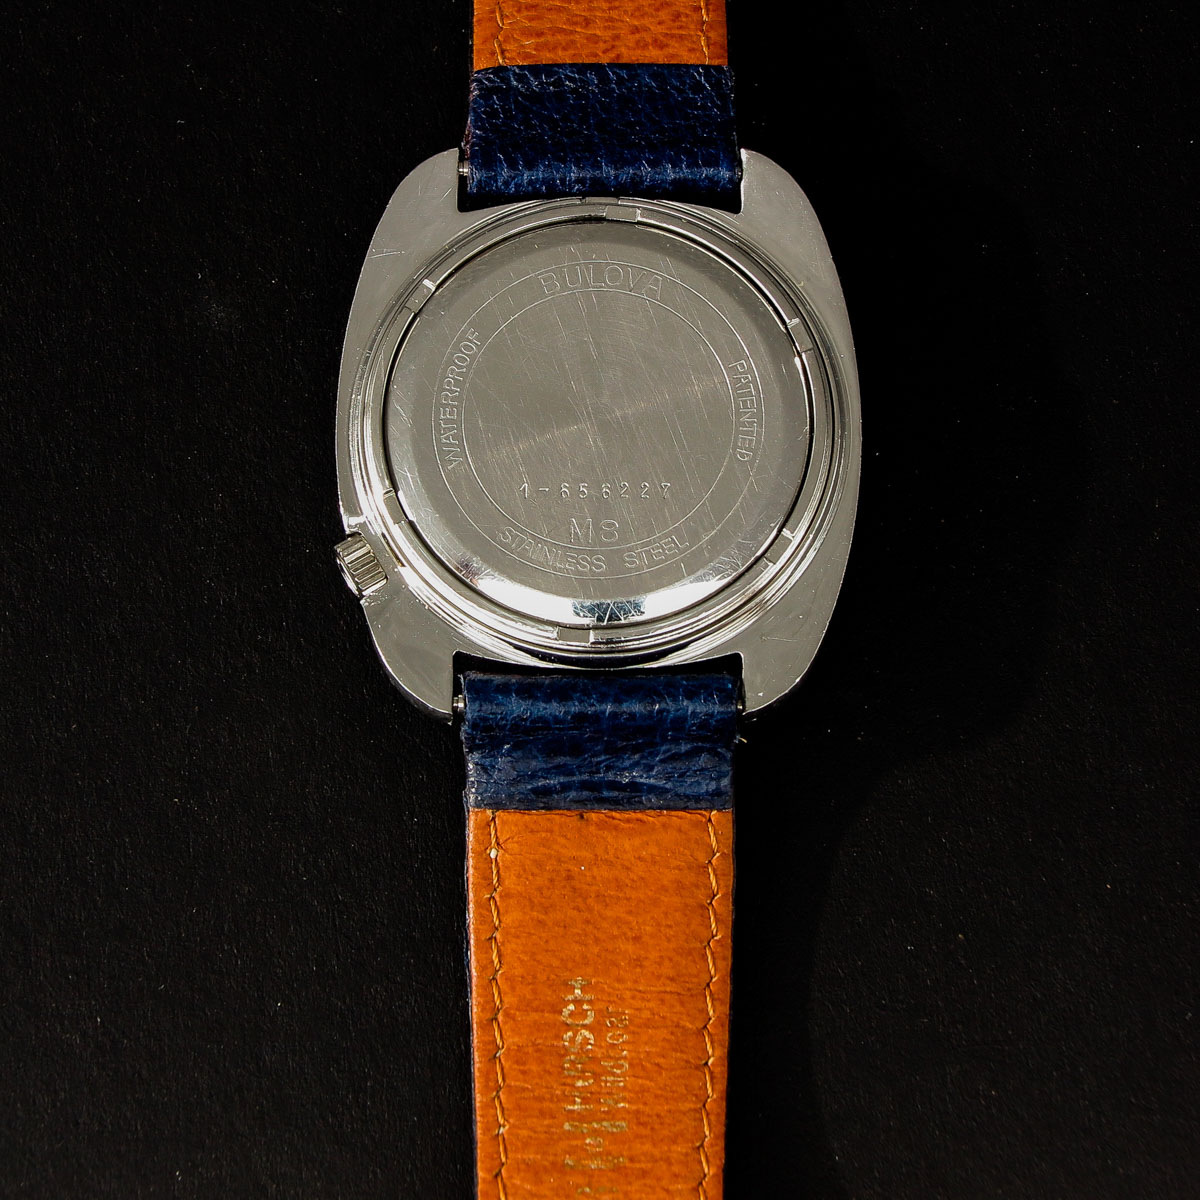 A Mens Bulova Accutron Watch - Image 3 of 3